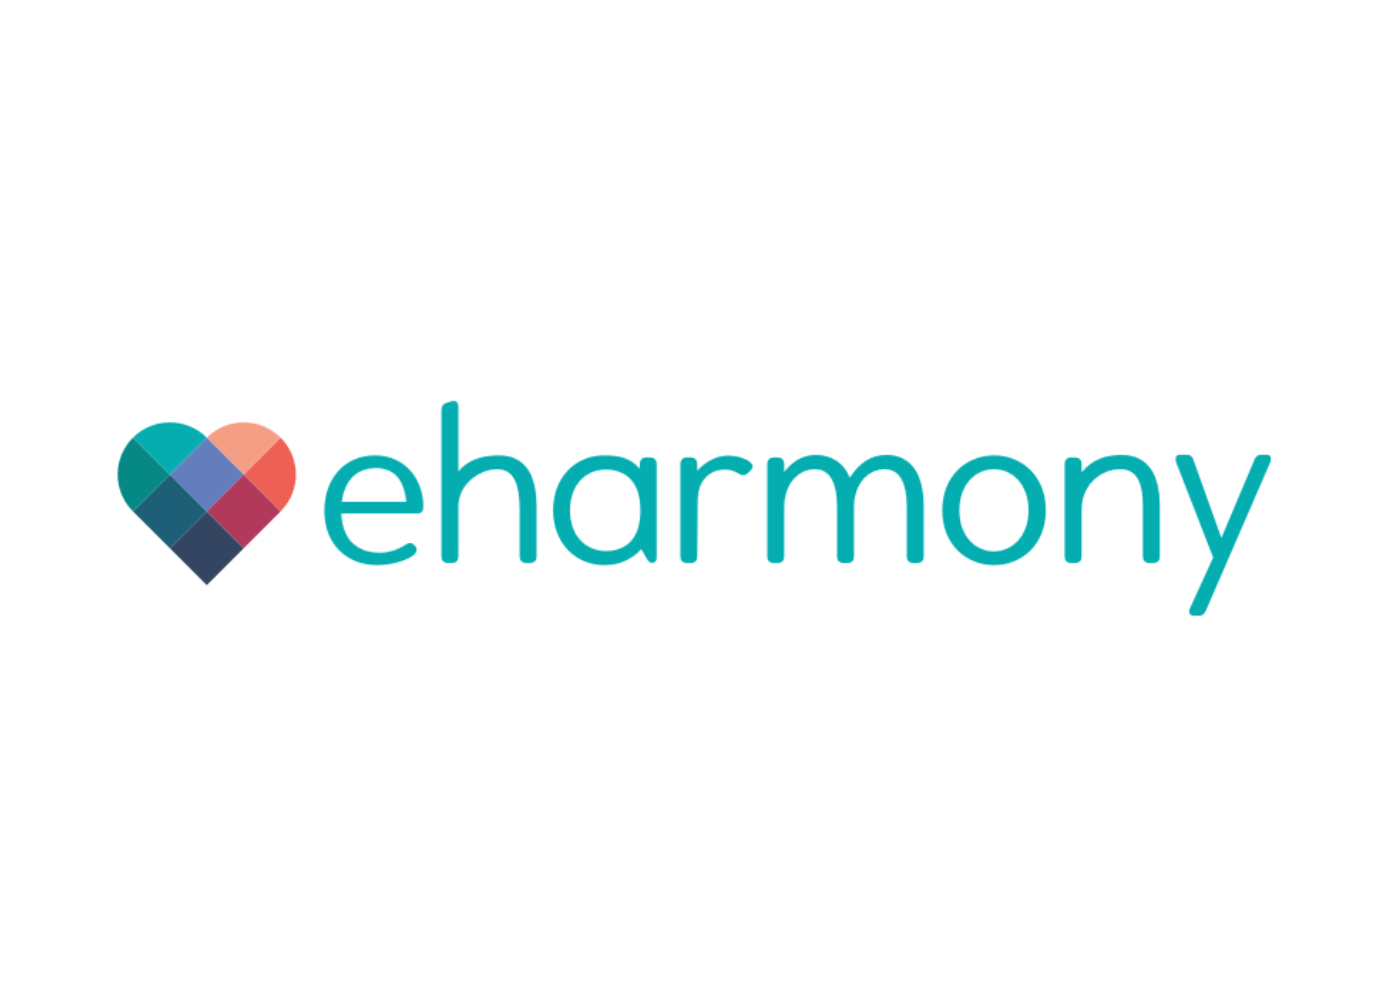 eHarmony Logo - eHarmony Reveals Brand New Logo - Global Dating Insights